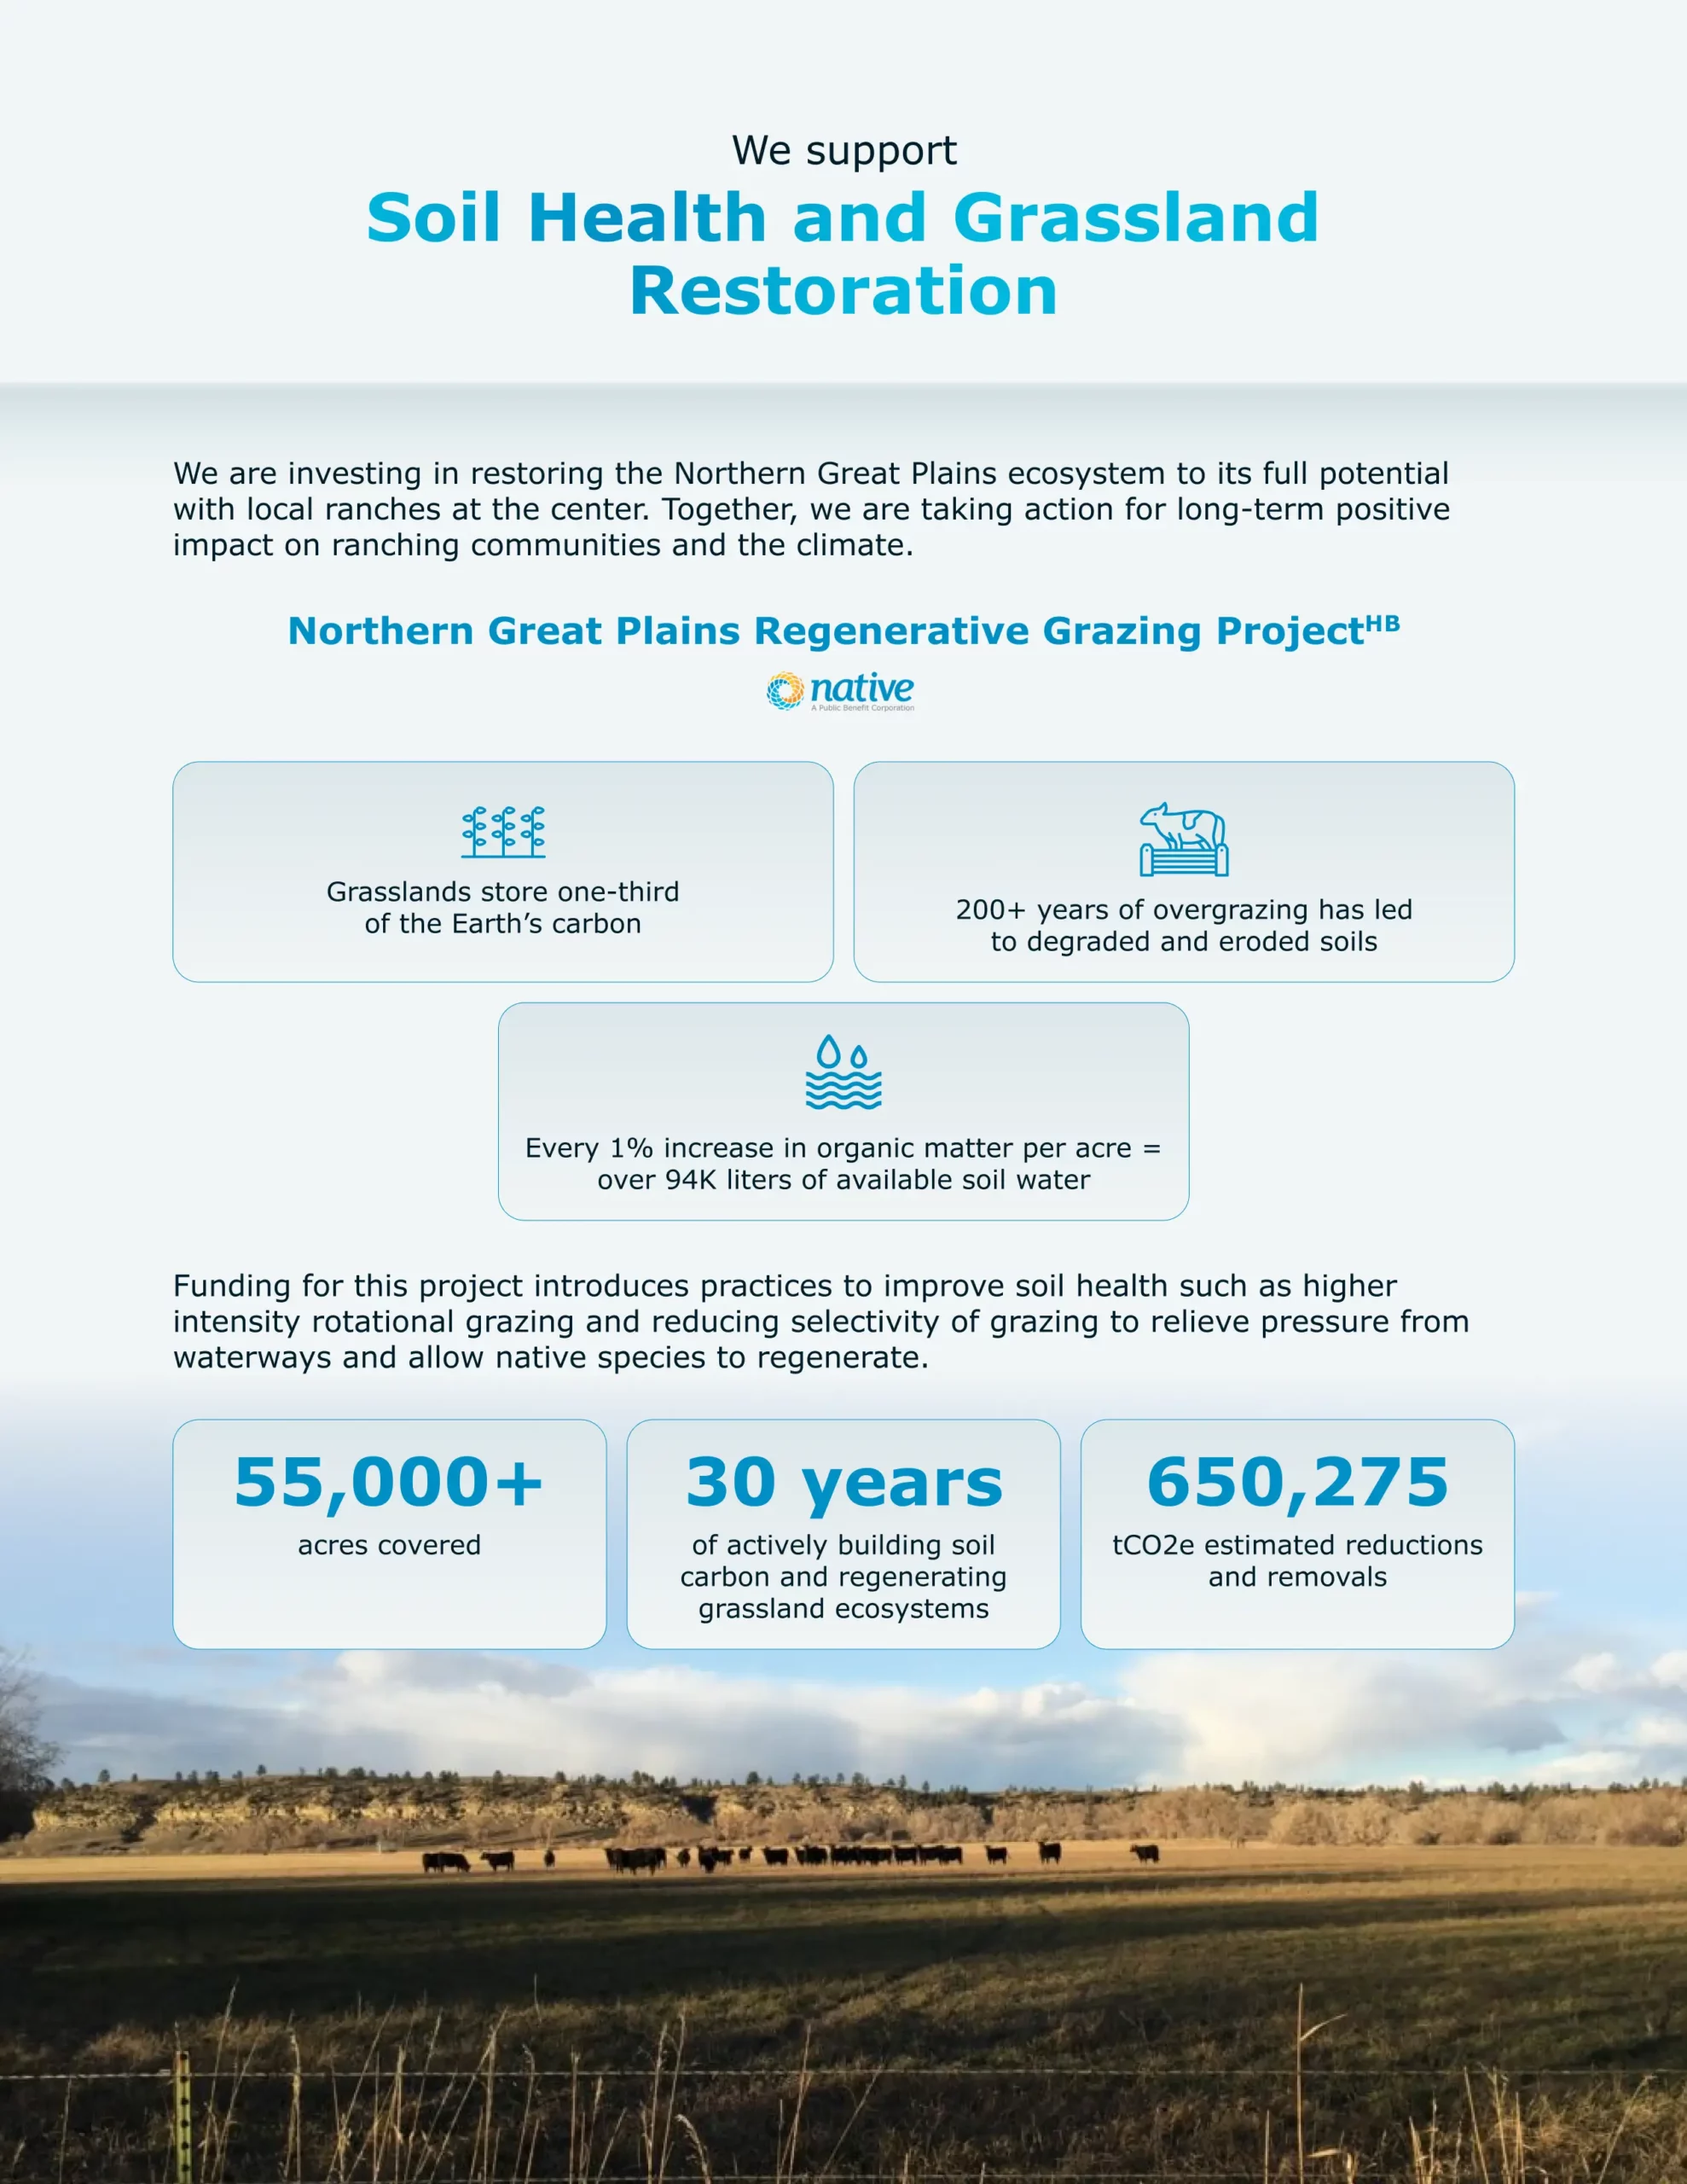 Northern Great Plains Regenerative Grazing ProjectHB